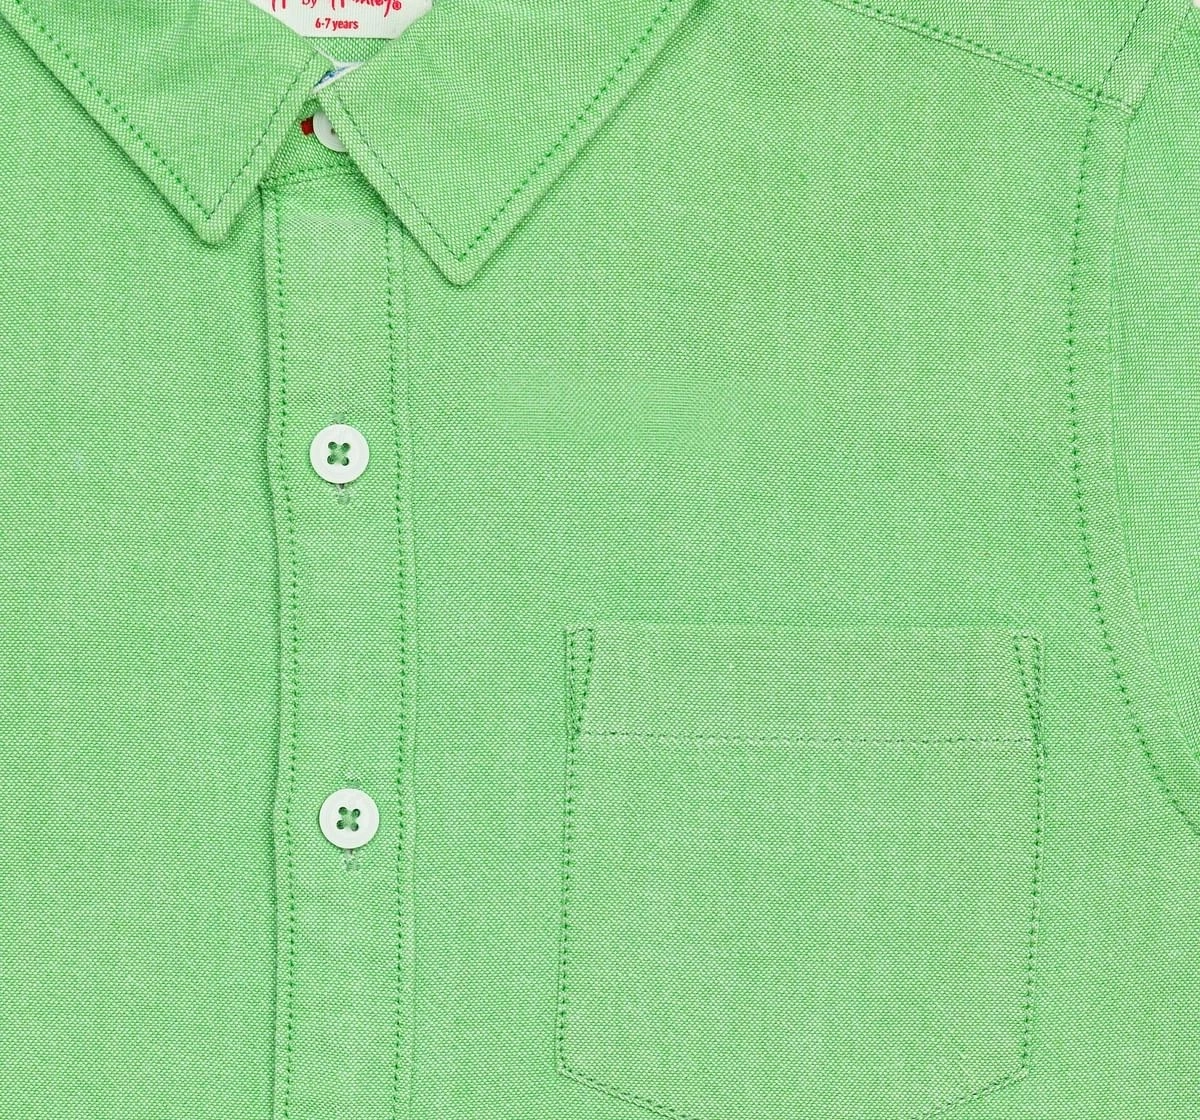 H by Hamleys Boys Full Sleeves Shirt Oxford Solid Green-Green